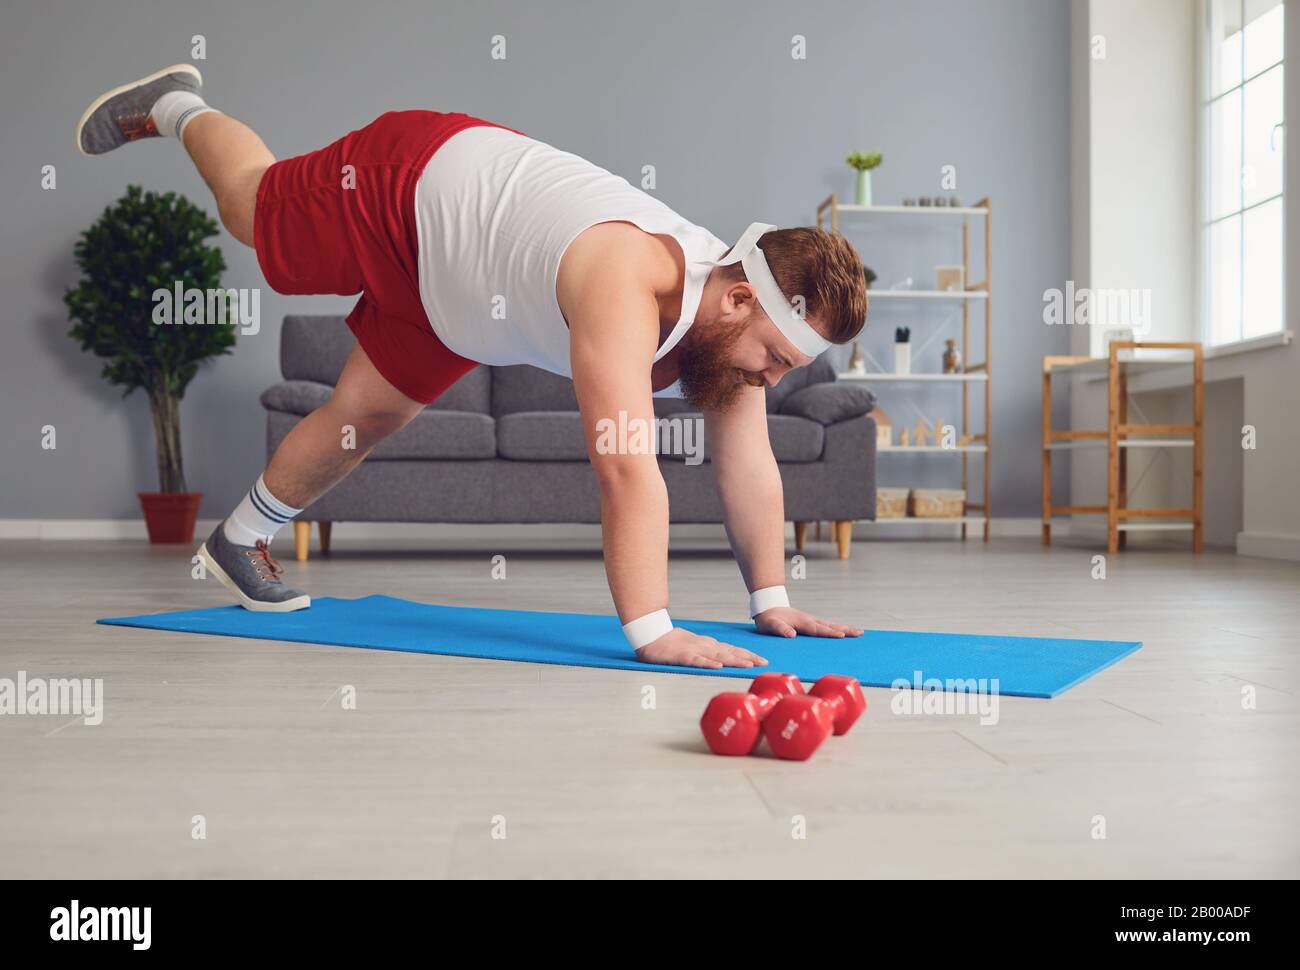 https://c8.alamy.com/comp/2B00ADF/funny-yoga-fat-man-doing-yoga-exercises-in-the-room-2B00ADF.jpg